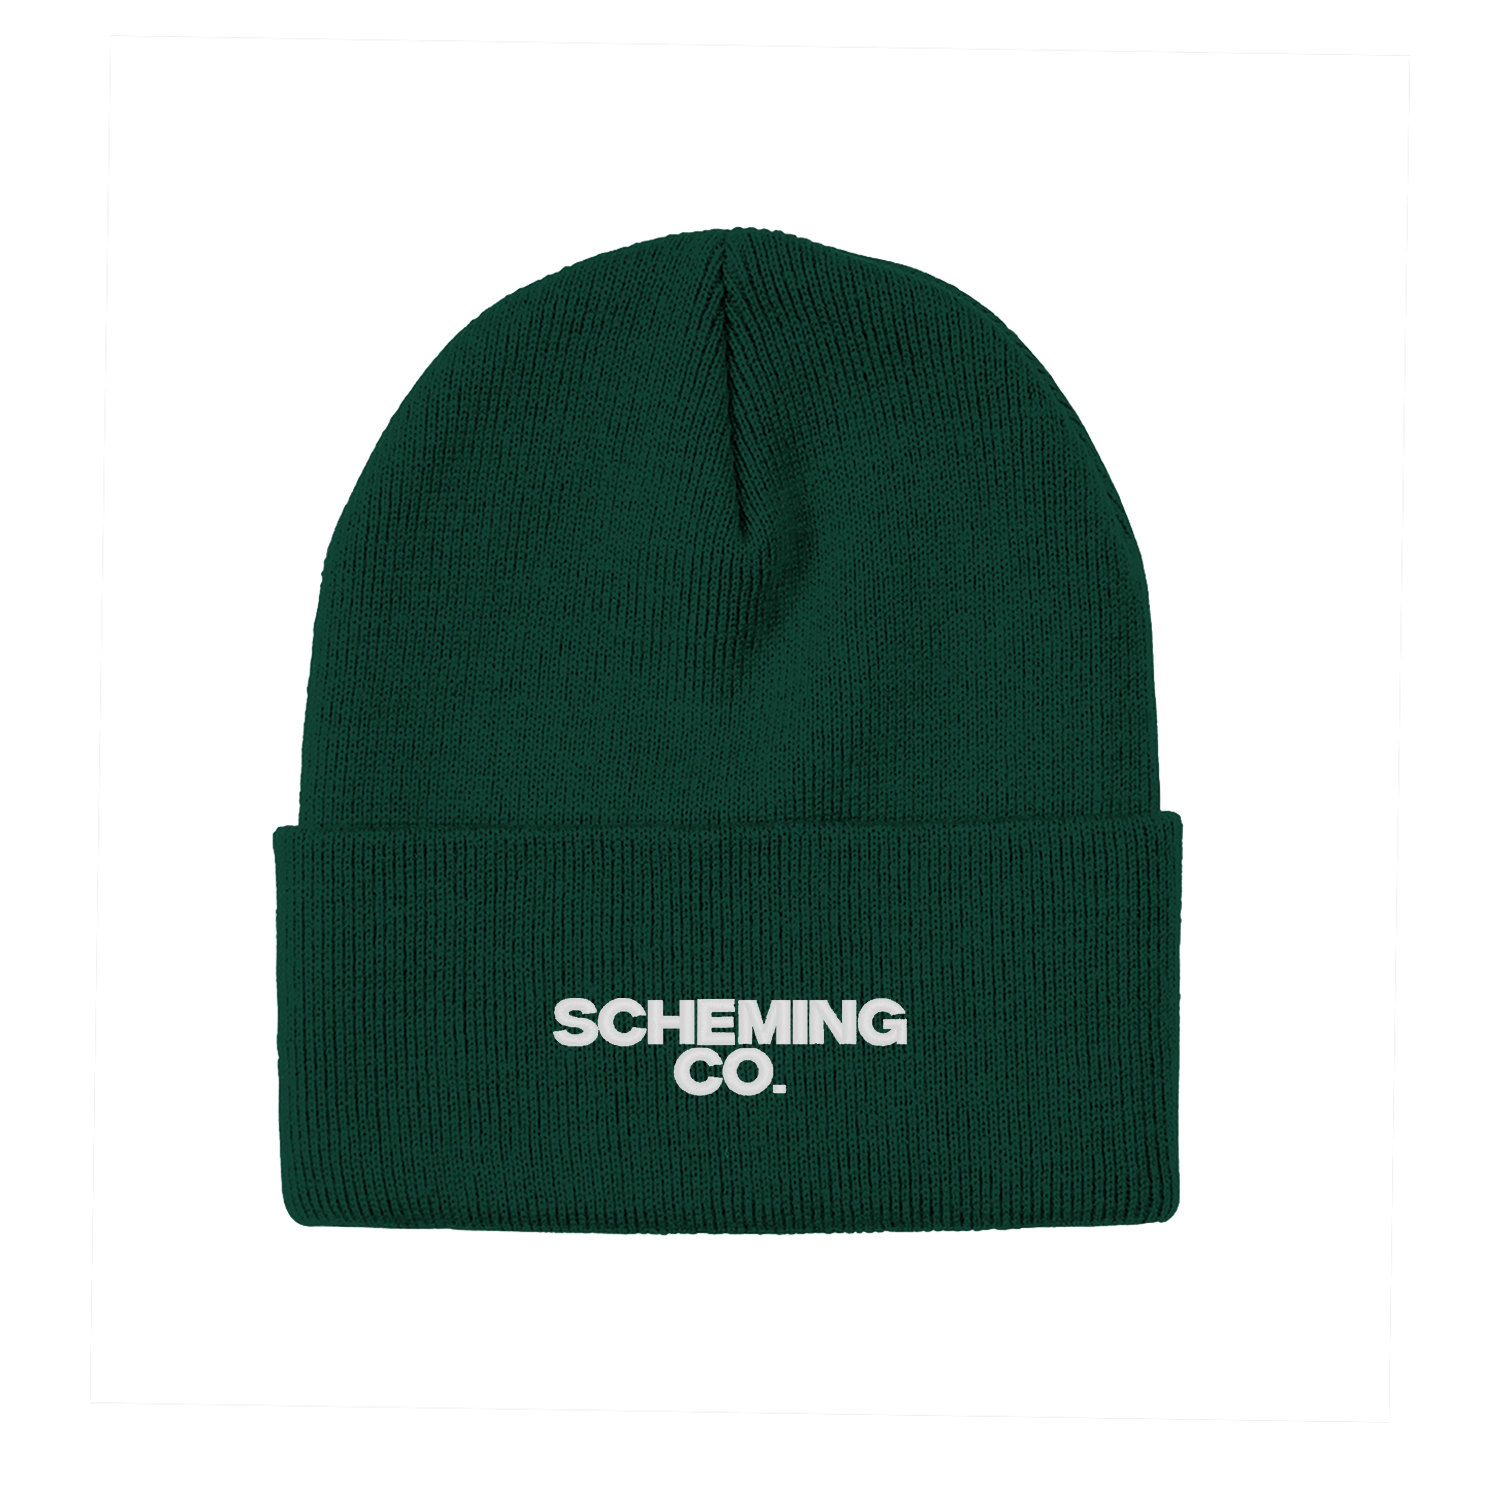 Scheming Co. Stock Toque - Scheming Co.